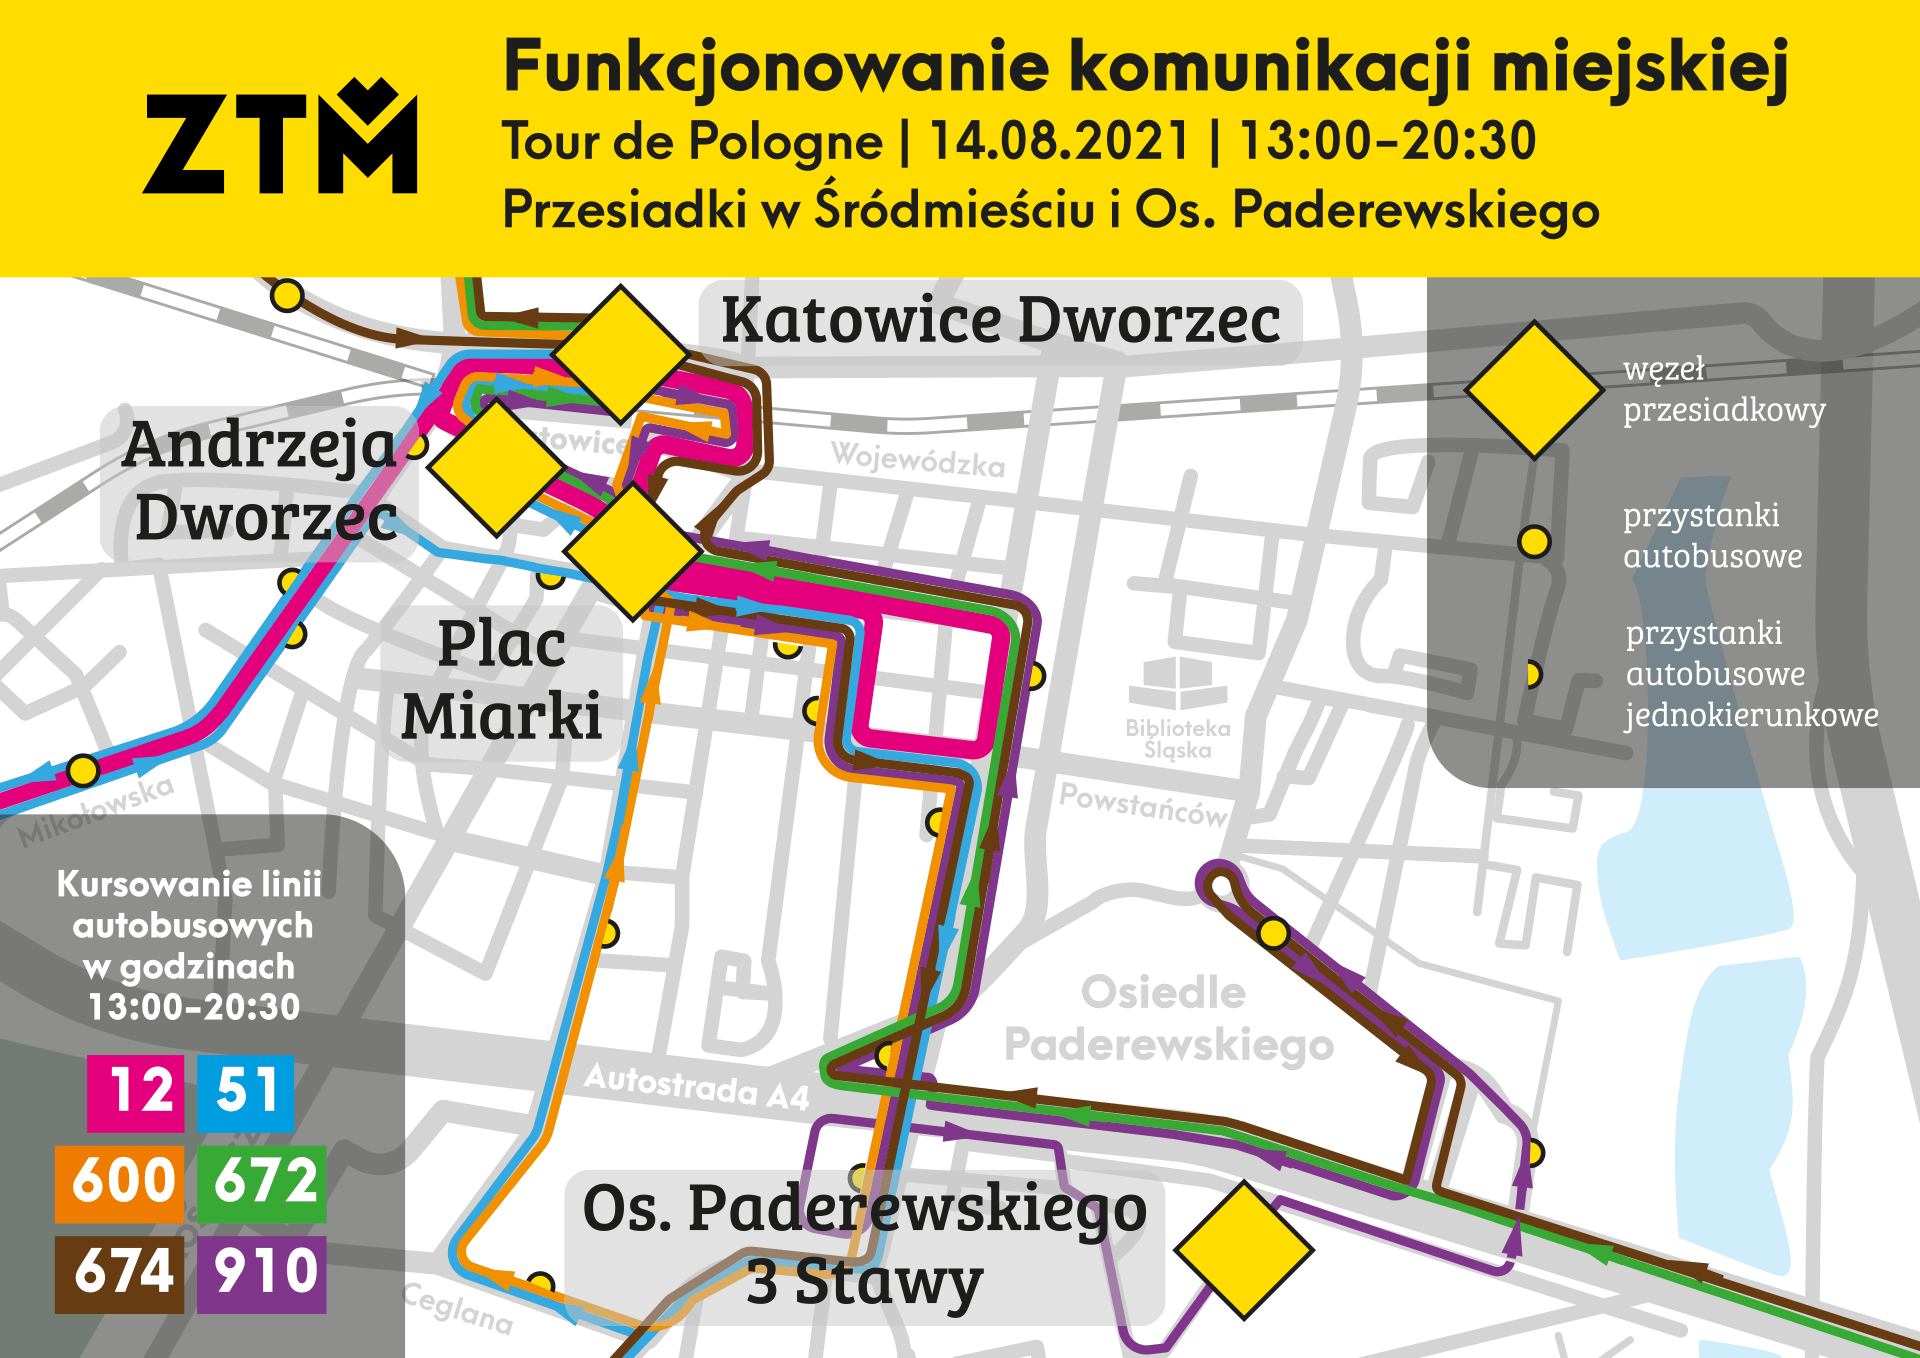 ZTM Tour de Pologne Mapy objazdowe Katowice Centrum Paderewskiego